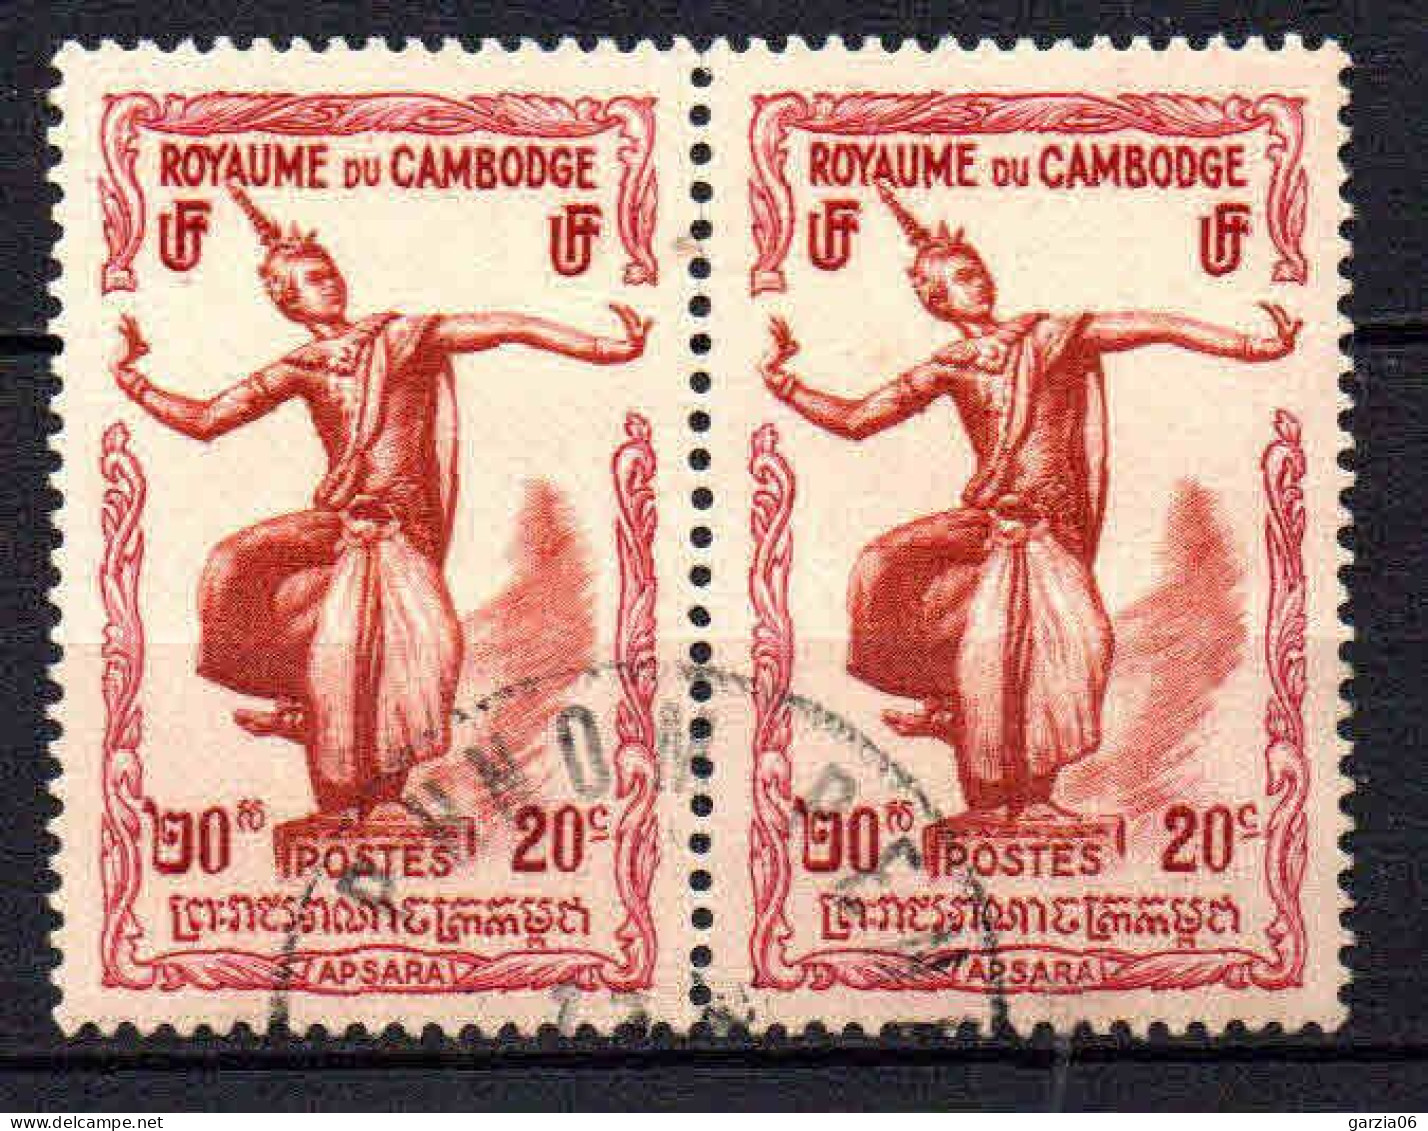 Cambodge - 1951 - Danseuses,  - N° 2 - Oblit - Used - Cambodia